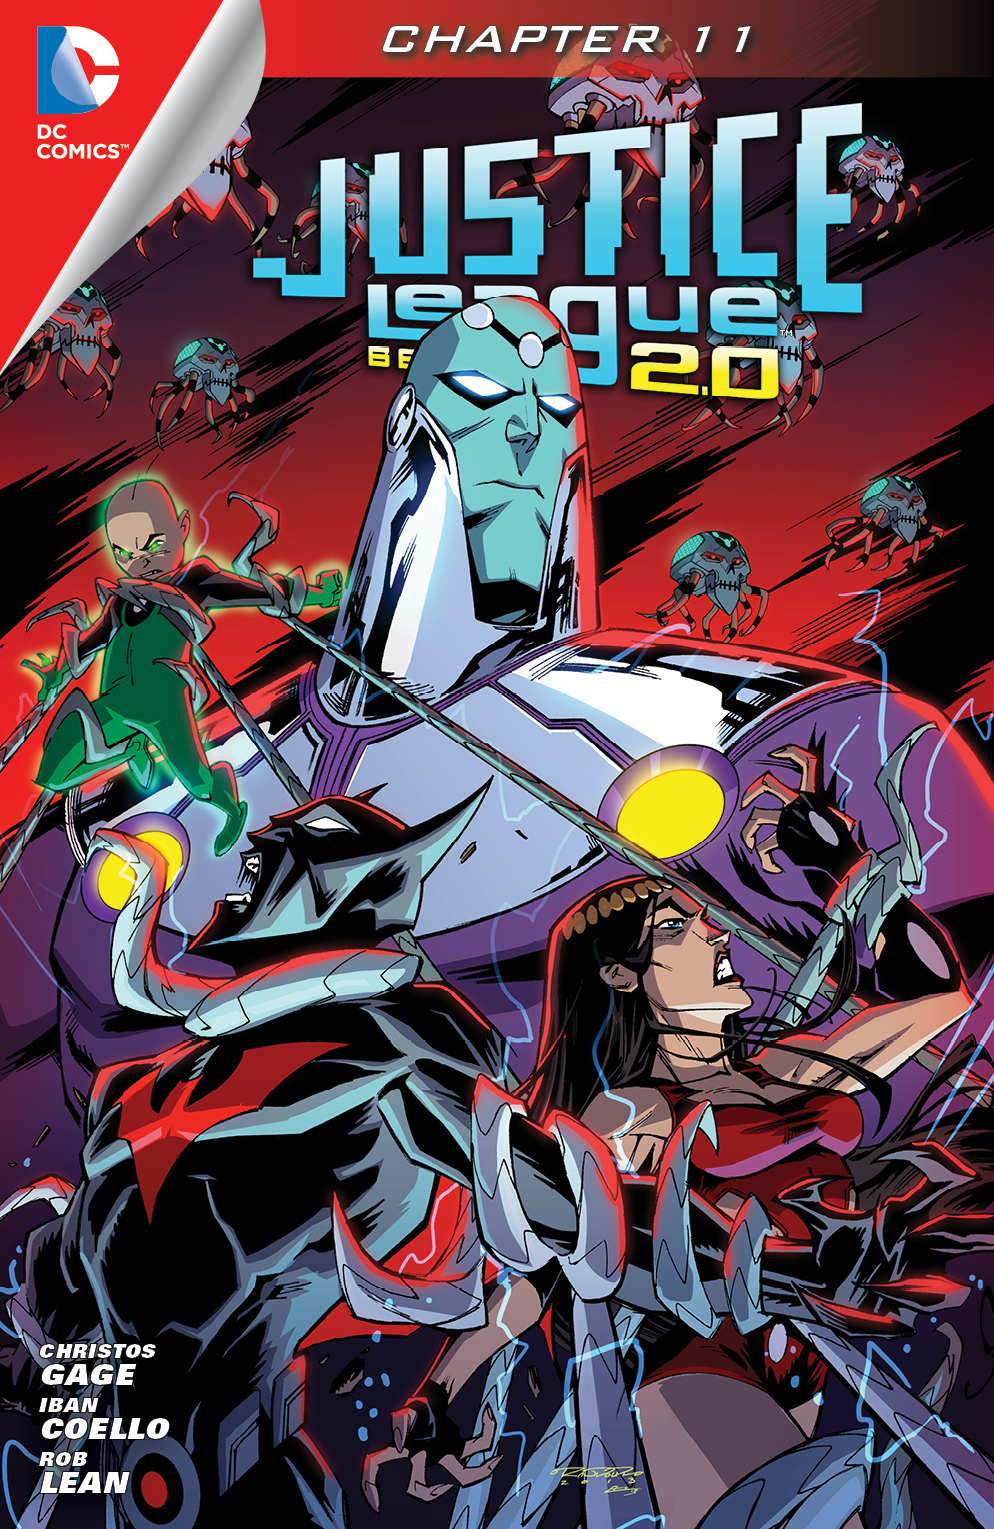 Justice League Beyond 2.0 #11 preview images